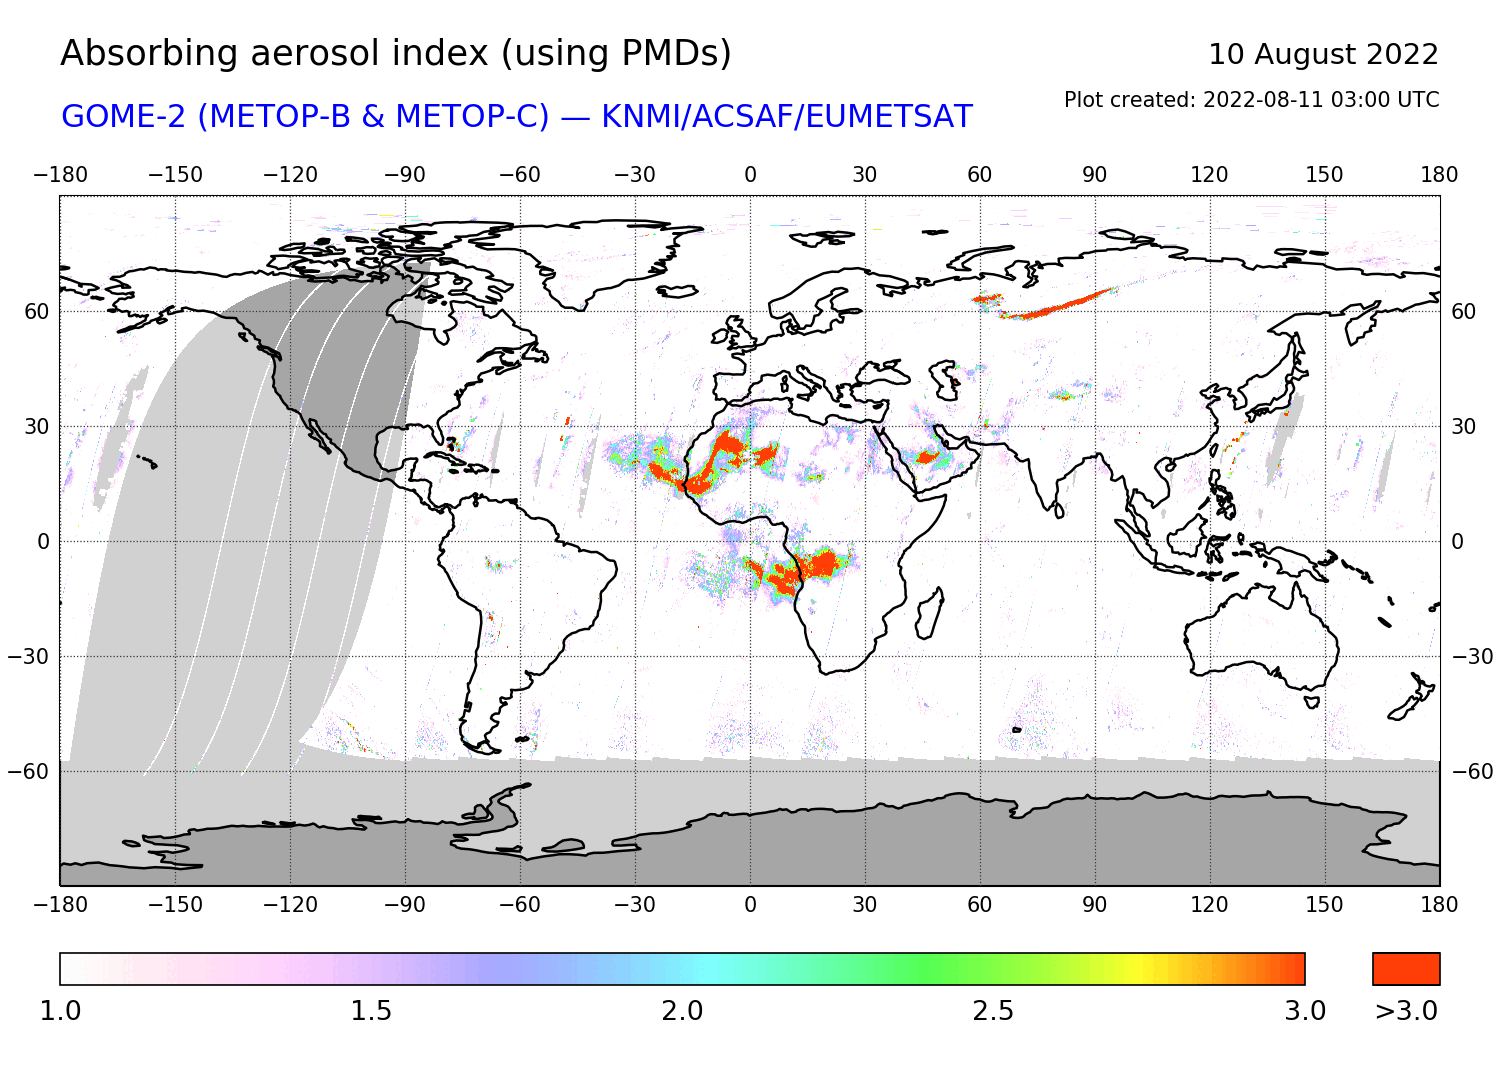 GOME-2 - Absorbing aerosol index of 10 August 2022